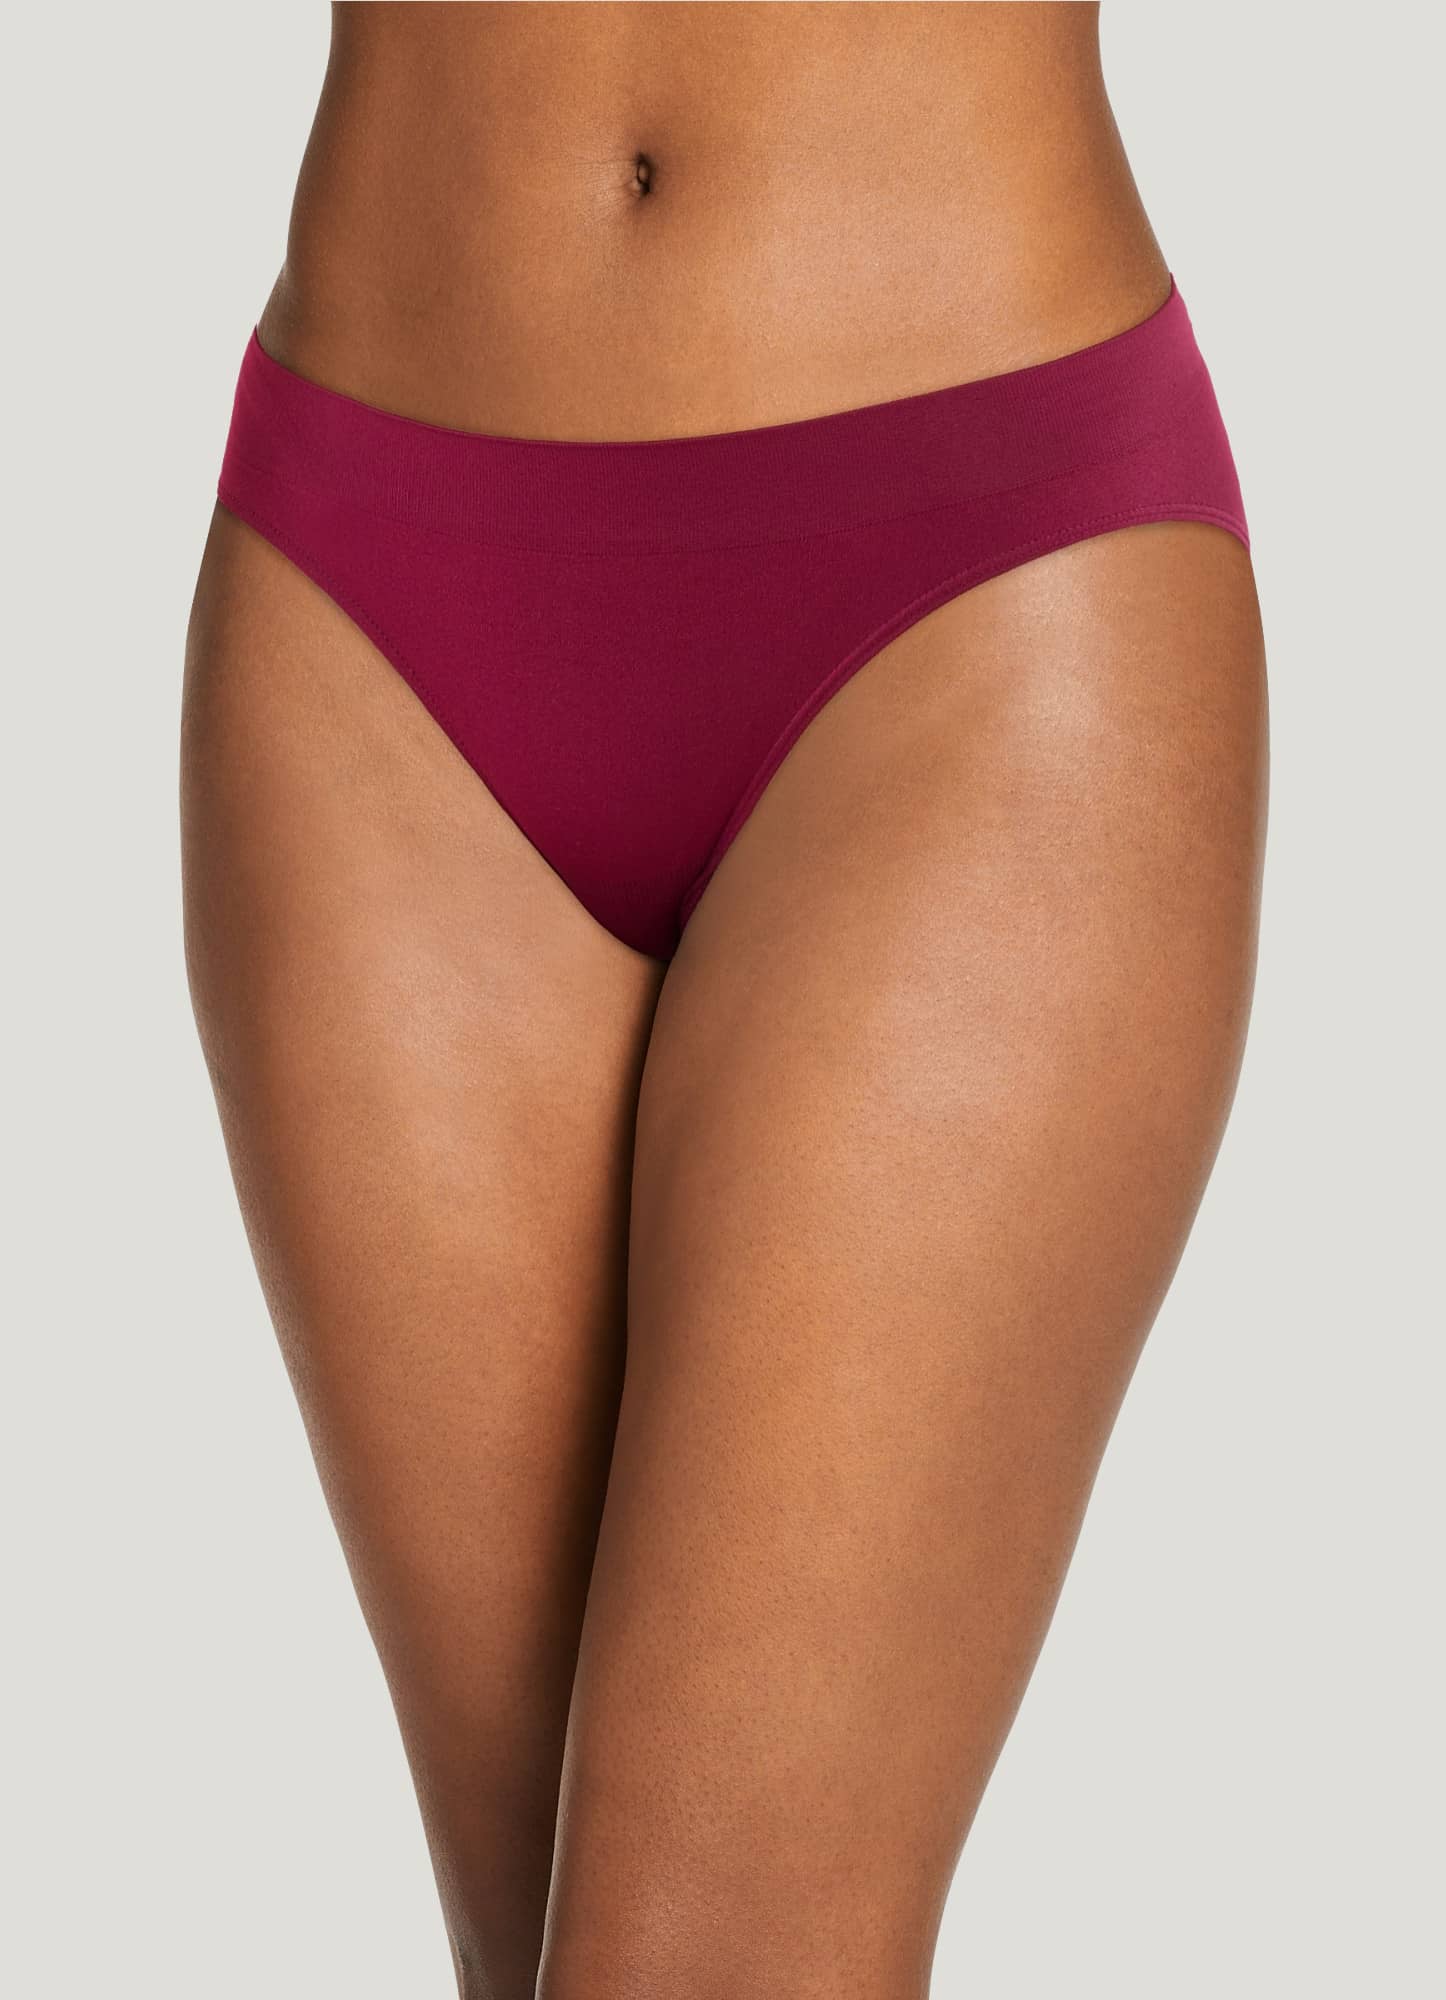 Funny Print Sexy Womens Girls Underwear Sports Panties Lingerie Seamless  Briefs